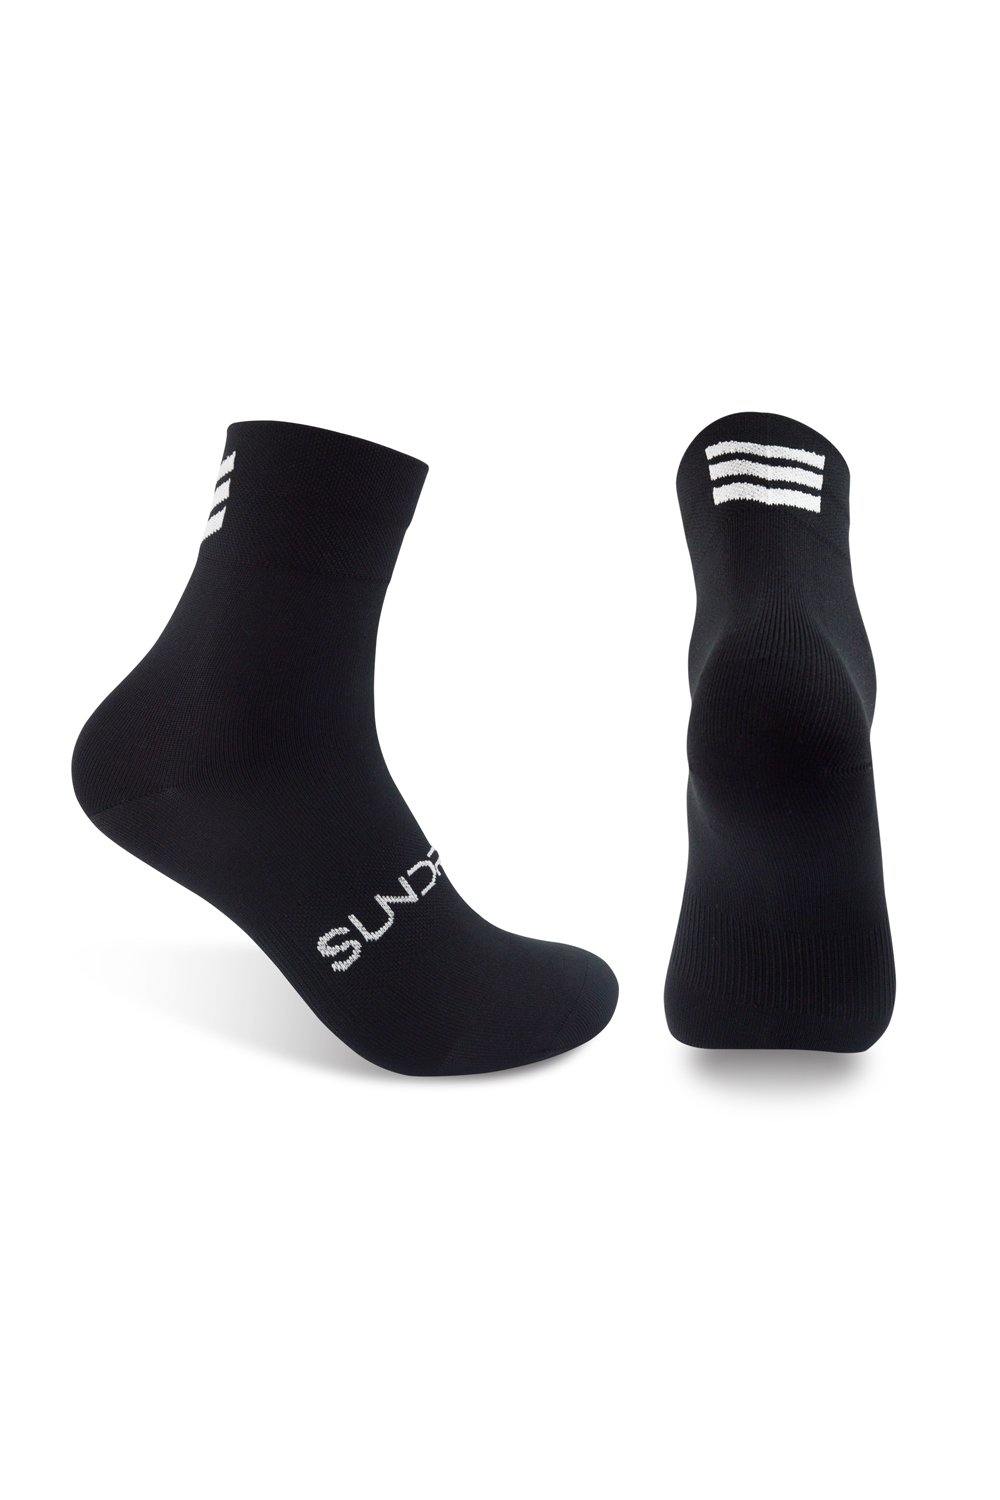 Sundried Cycle Socks Black w White Stripe Socks Activewear